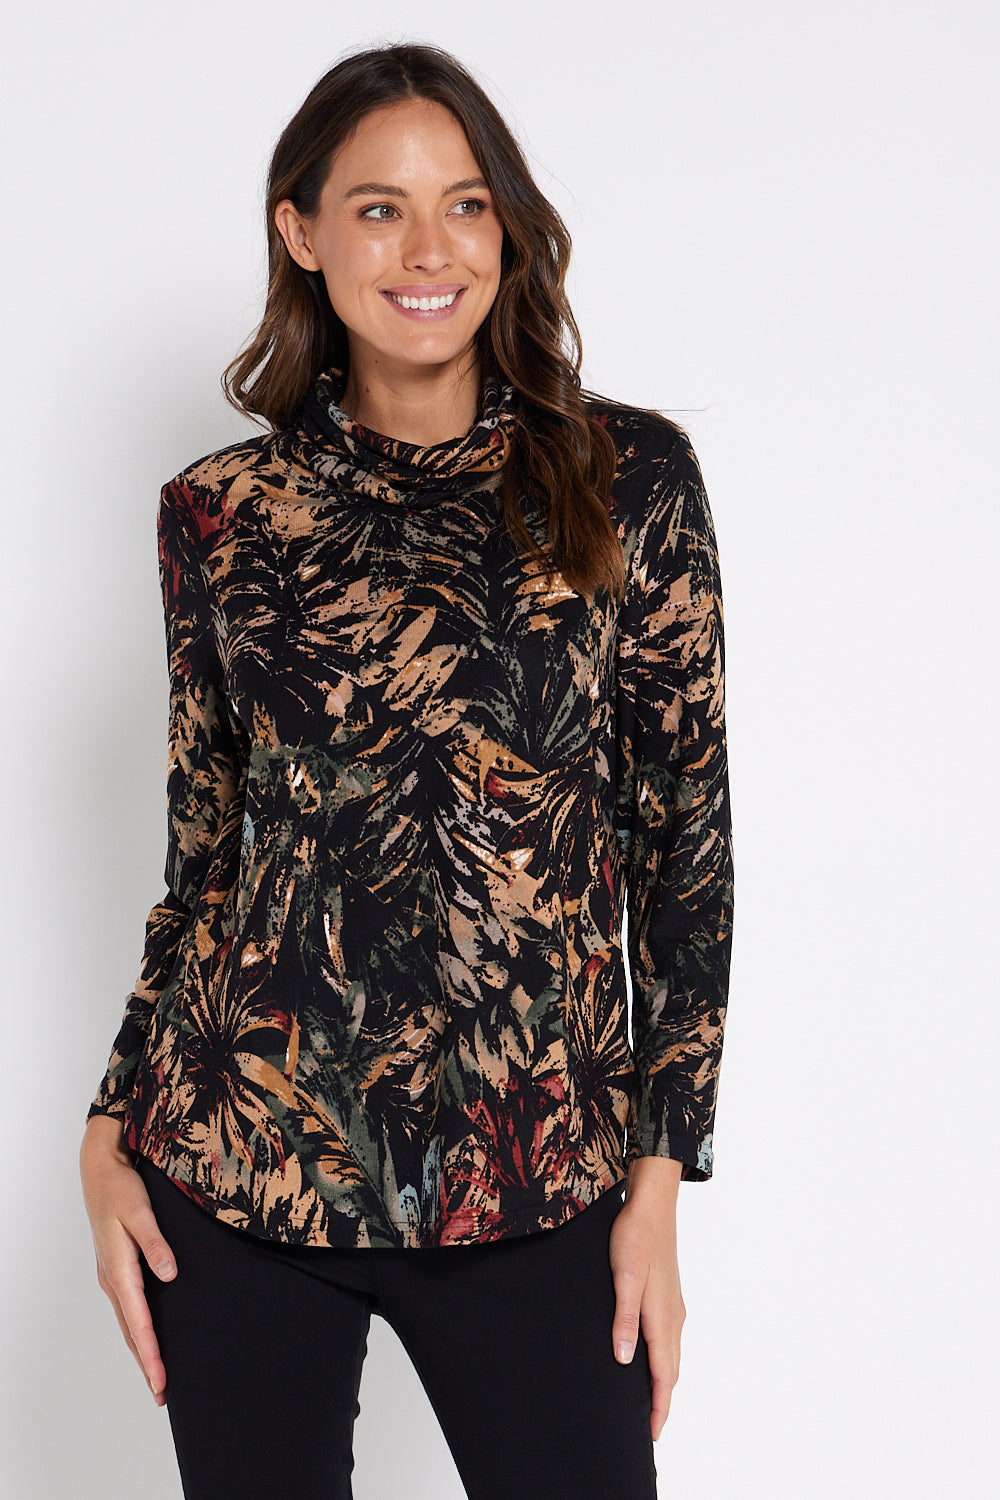 Rosana Cowl Knit Top - Multi Leaf Print